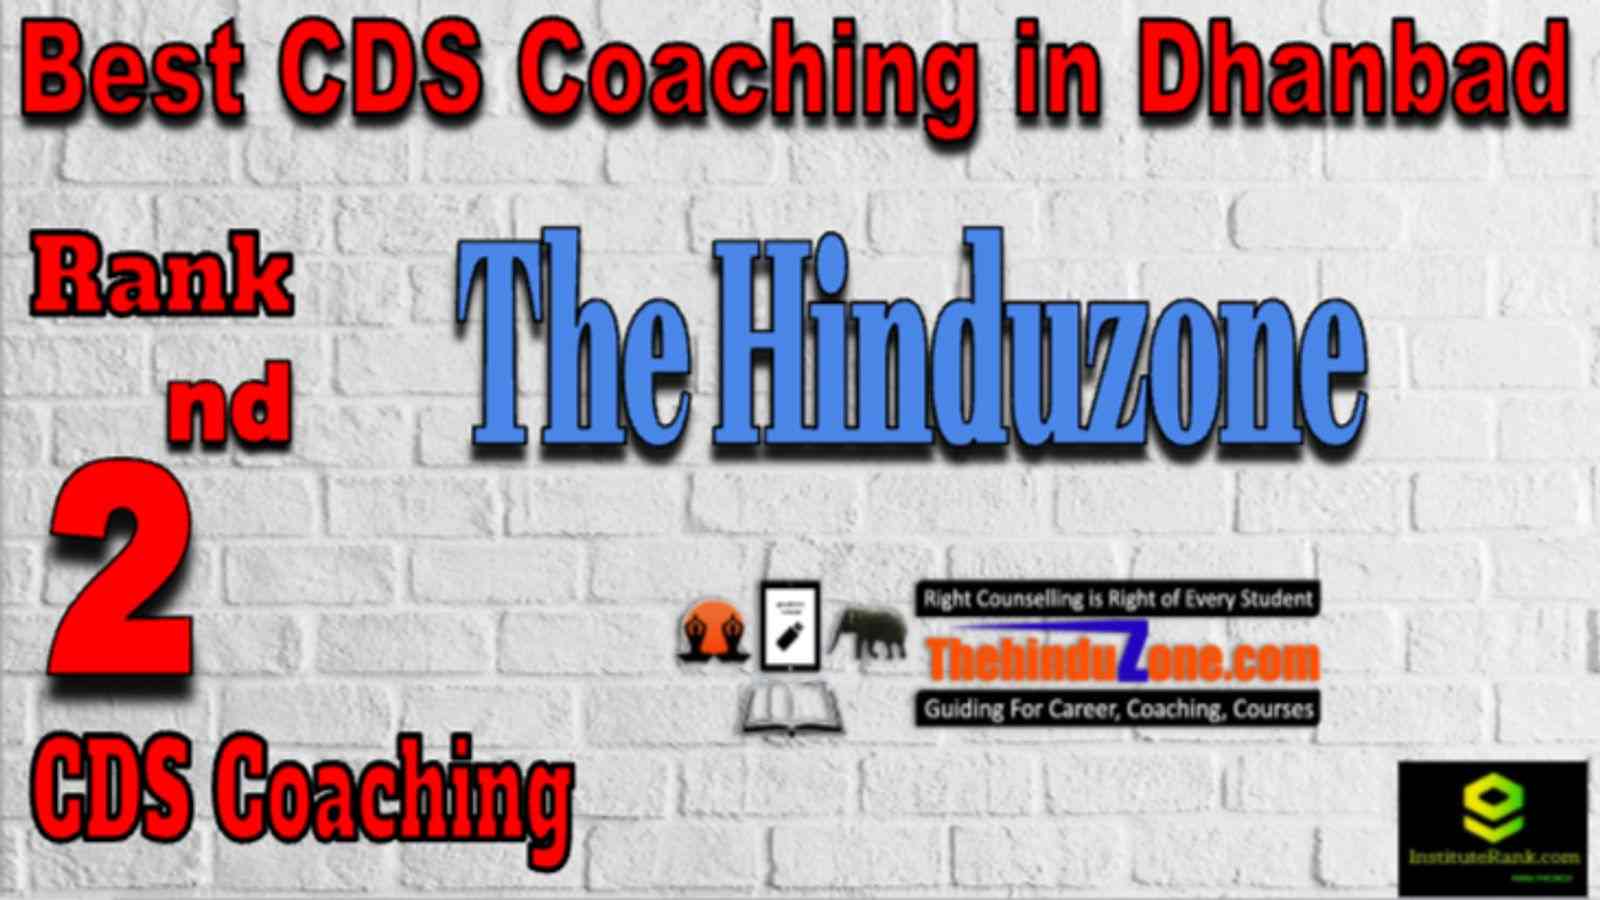 Rank 2 Best CDS Coaching in Dhanbad